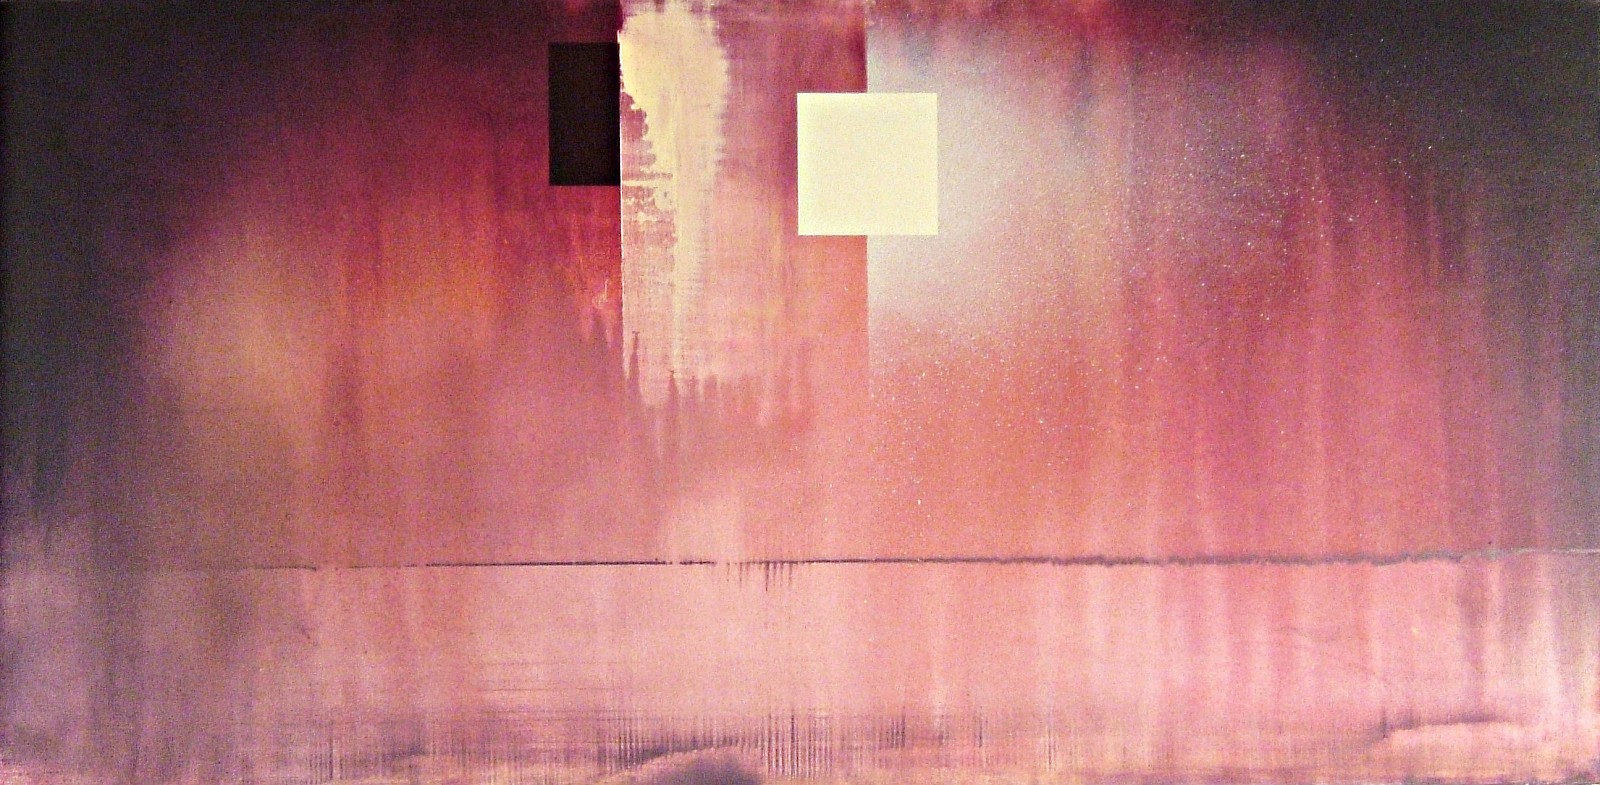 Richard Saba, Pendulum, 2004
Acrylic on canvas, 45 x 92 inches
SABA0018